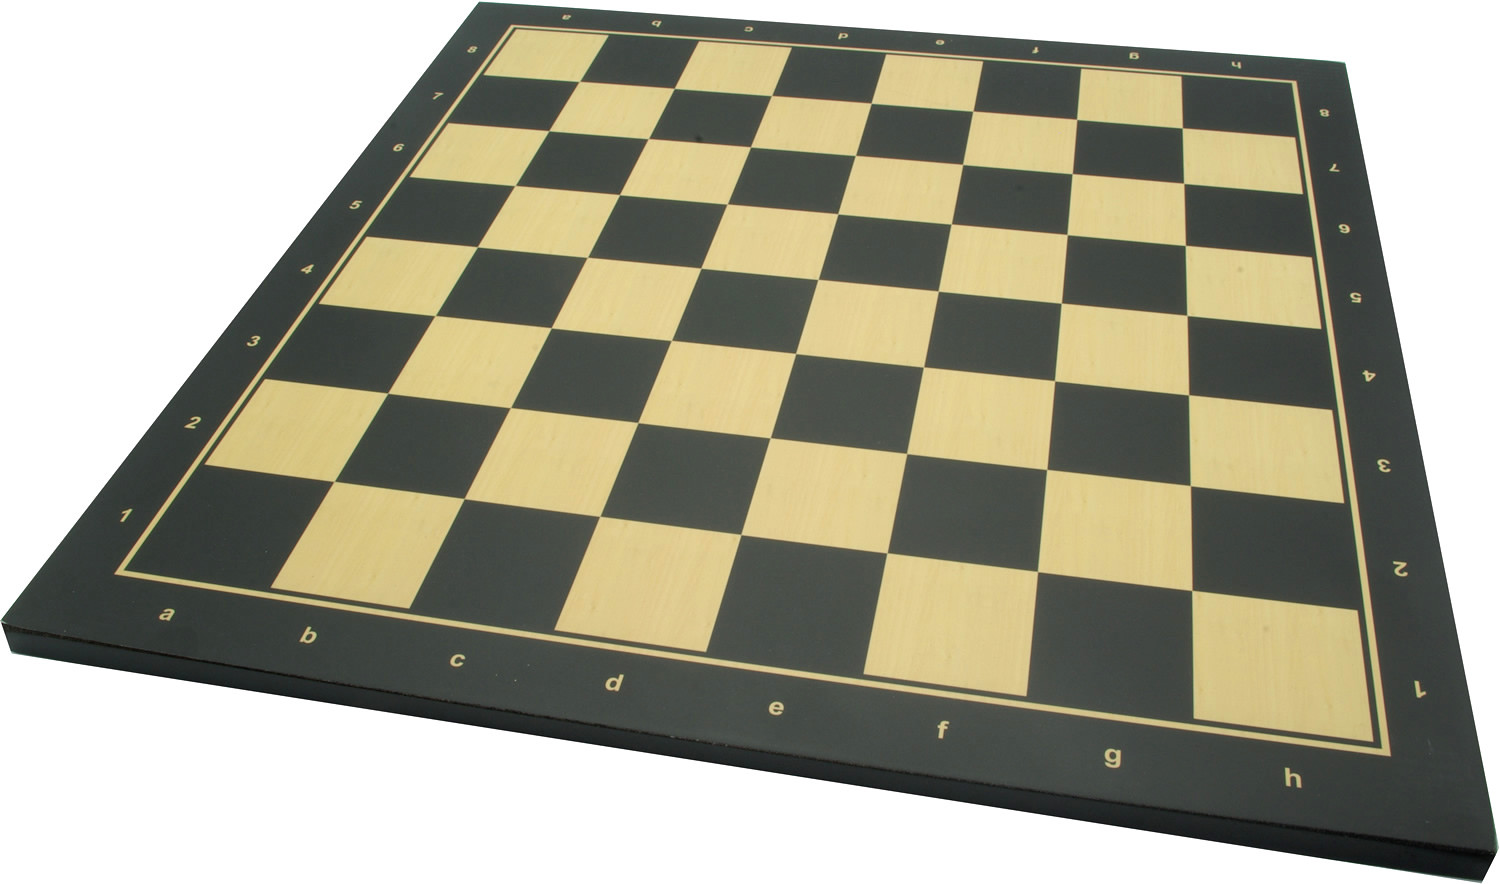 Wood Chess Board No 5 - 54 x 54cm, Black & Natural